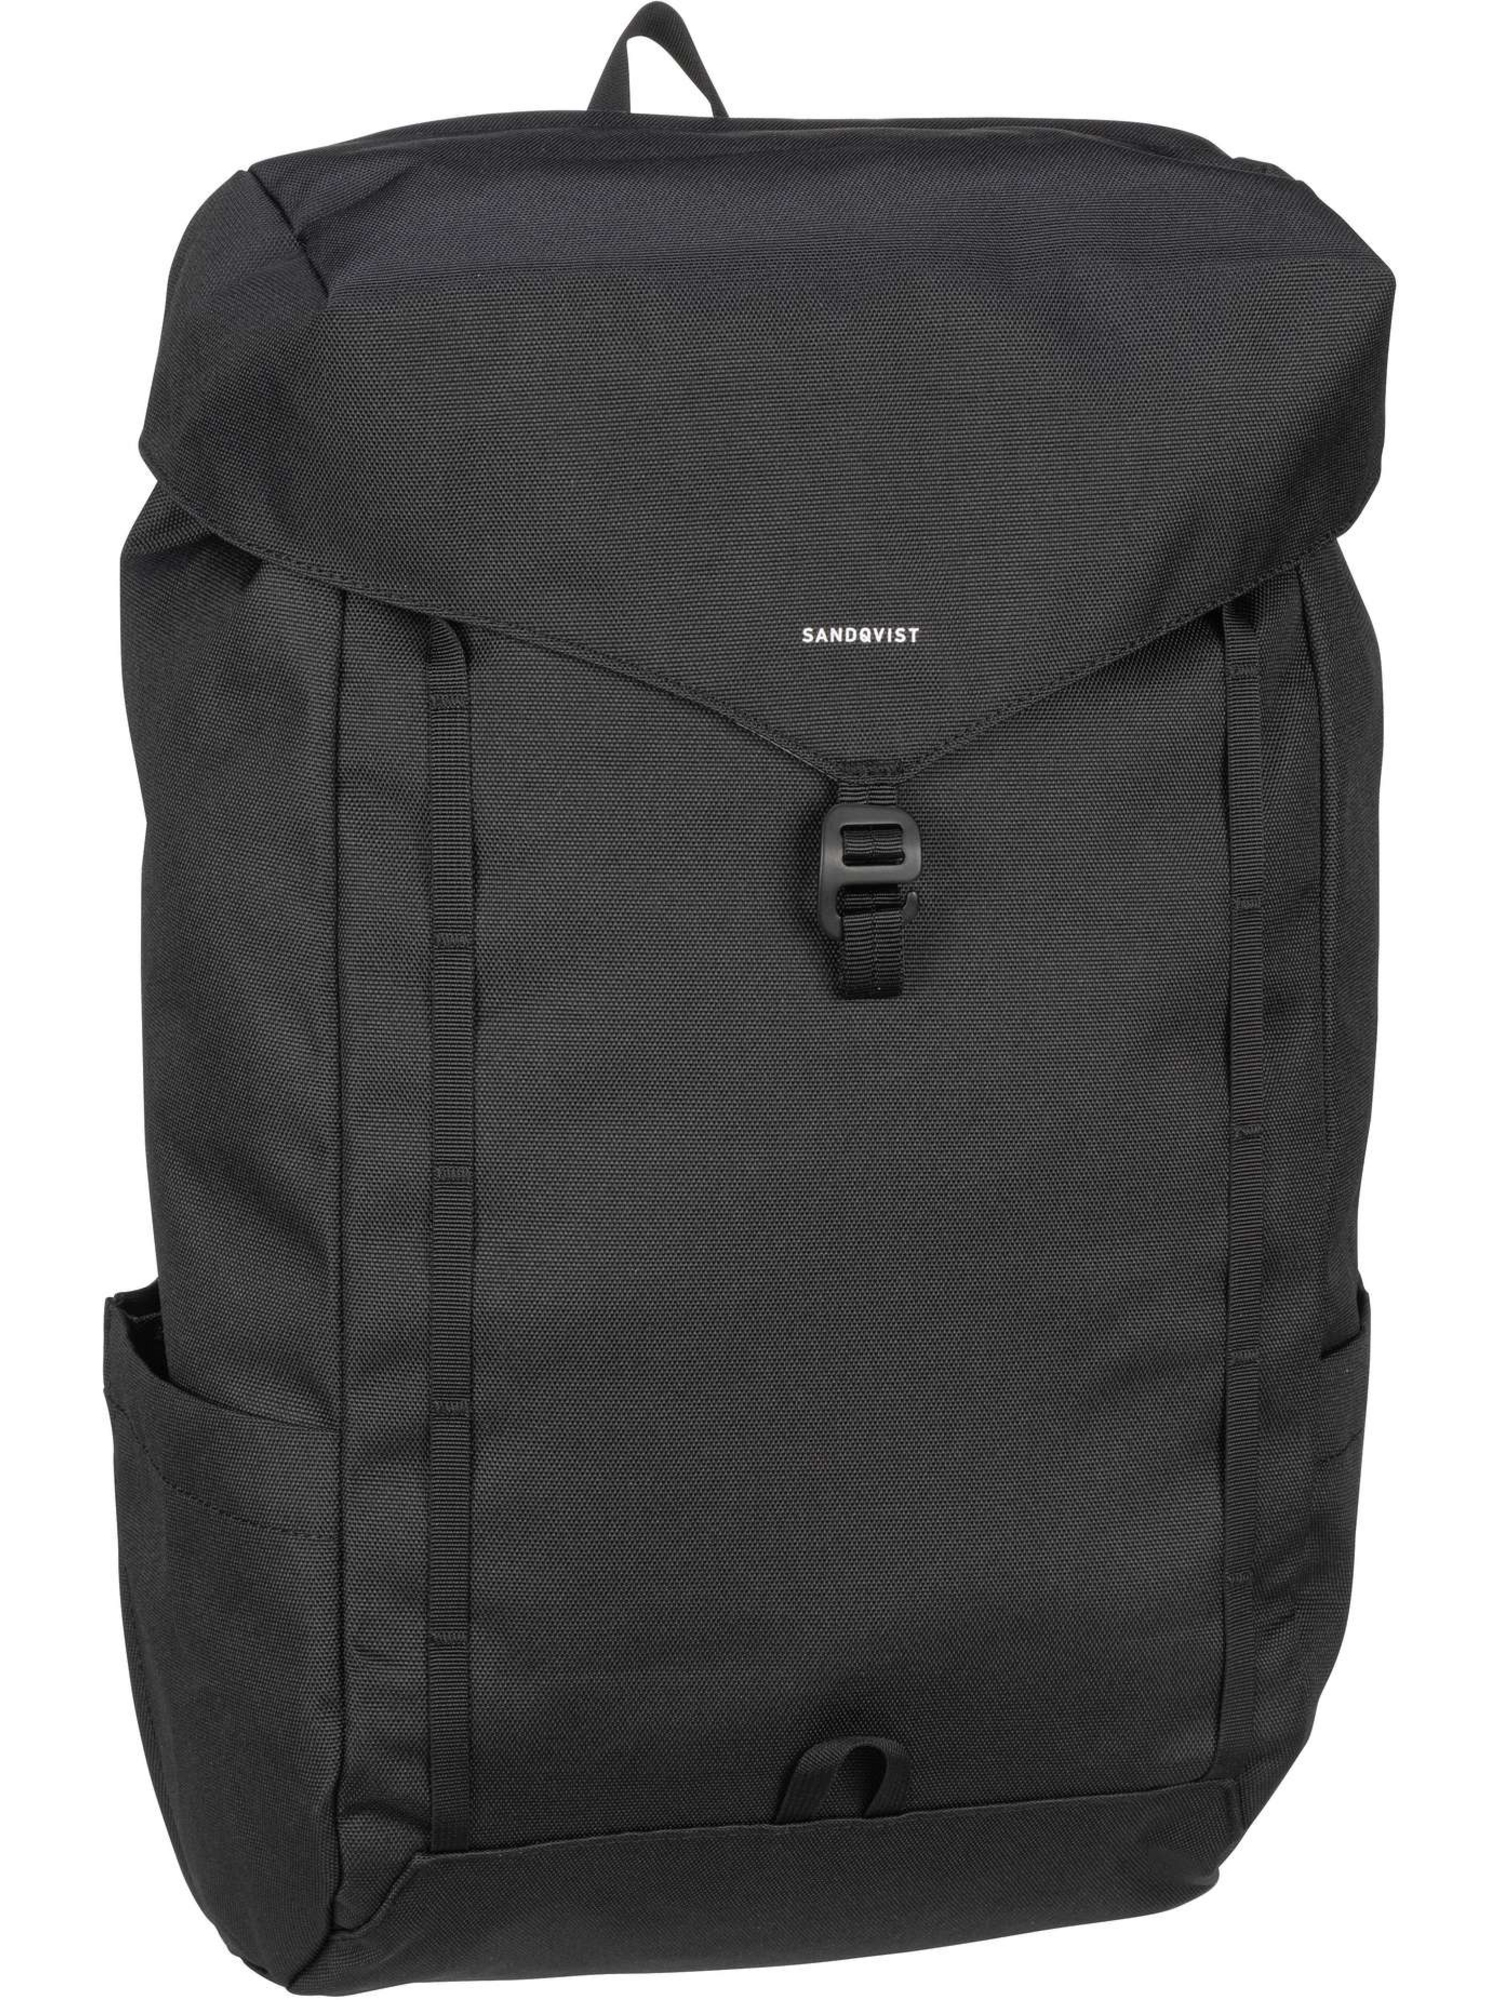 Рюкзак SANDQVIST/Backpack Walter Backpack, черный рюкзак sandqvist walter бежевый размер one size